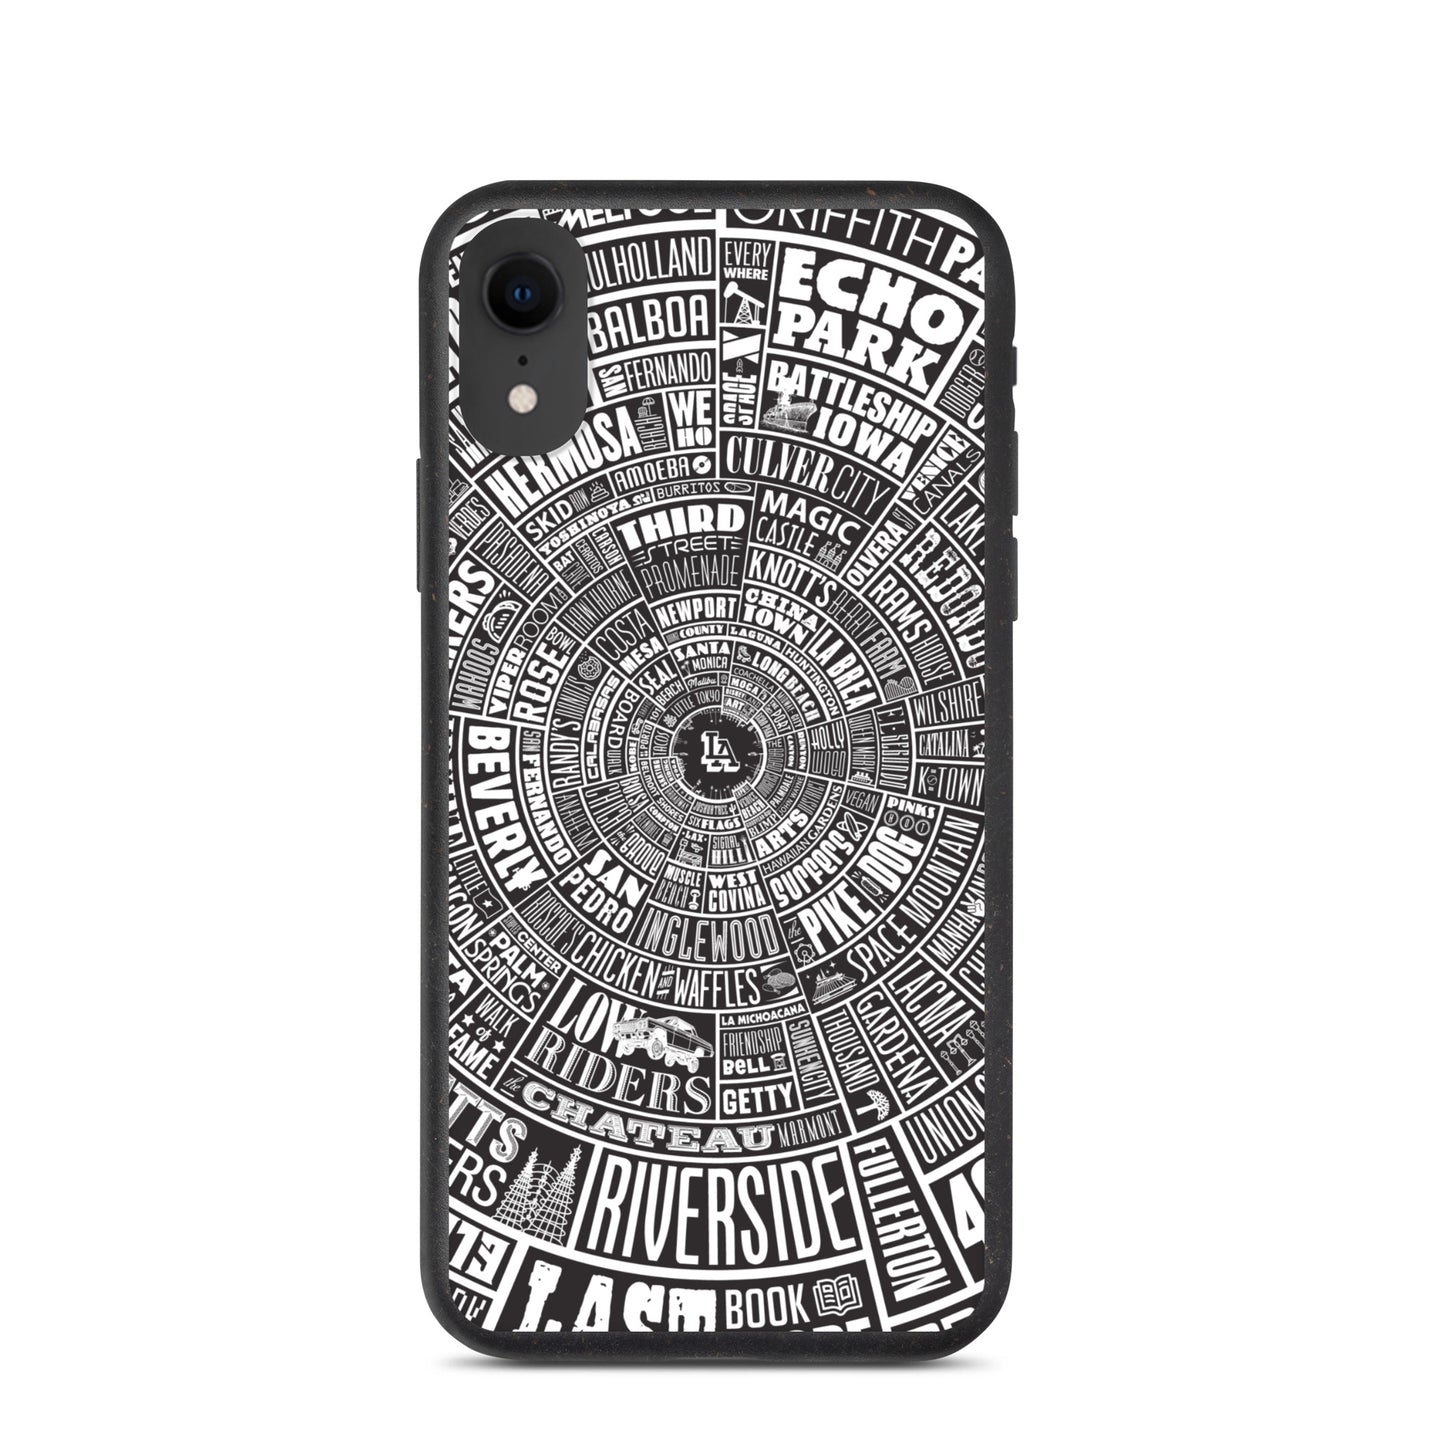 Los Angeles Type Wheel - Iphone Case - Black Bkg